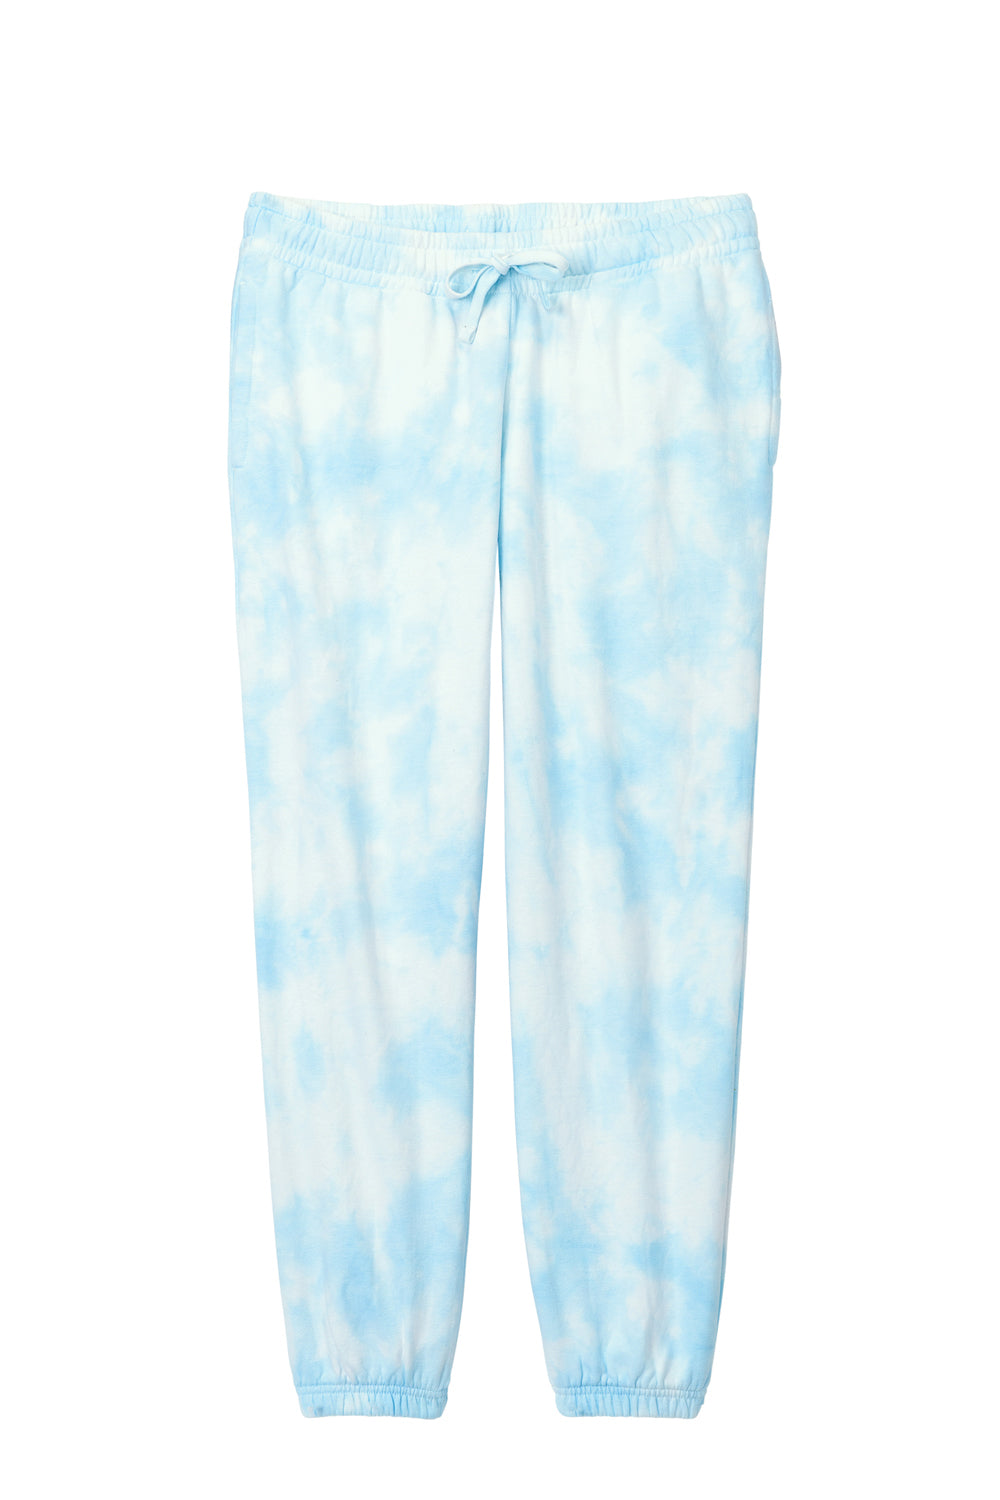 Port & Company Womens Beach Wash Tie Dye Sweatpants w/ Pockets Glacier Blue Flat Front